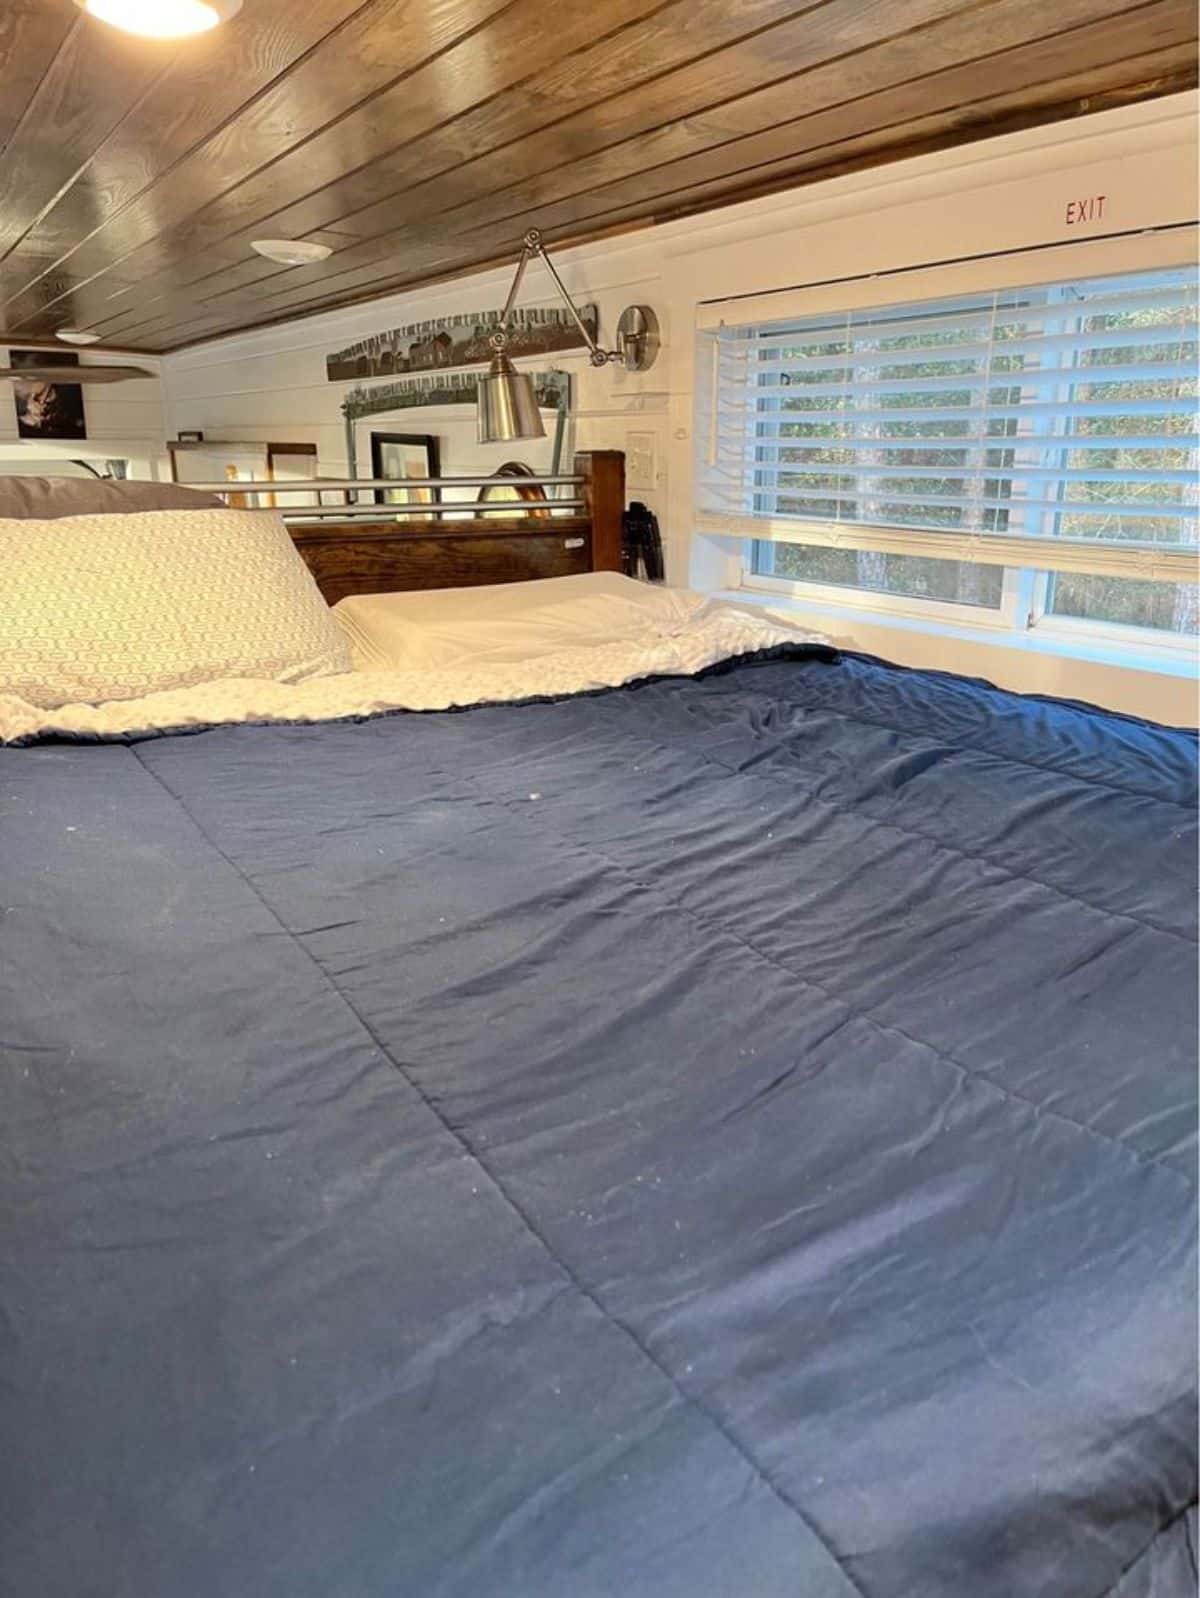 loft bedroom is super spacious with cozy mattress